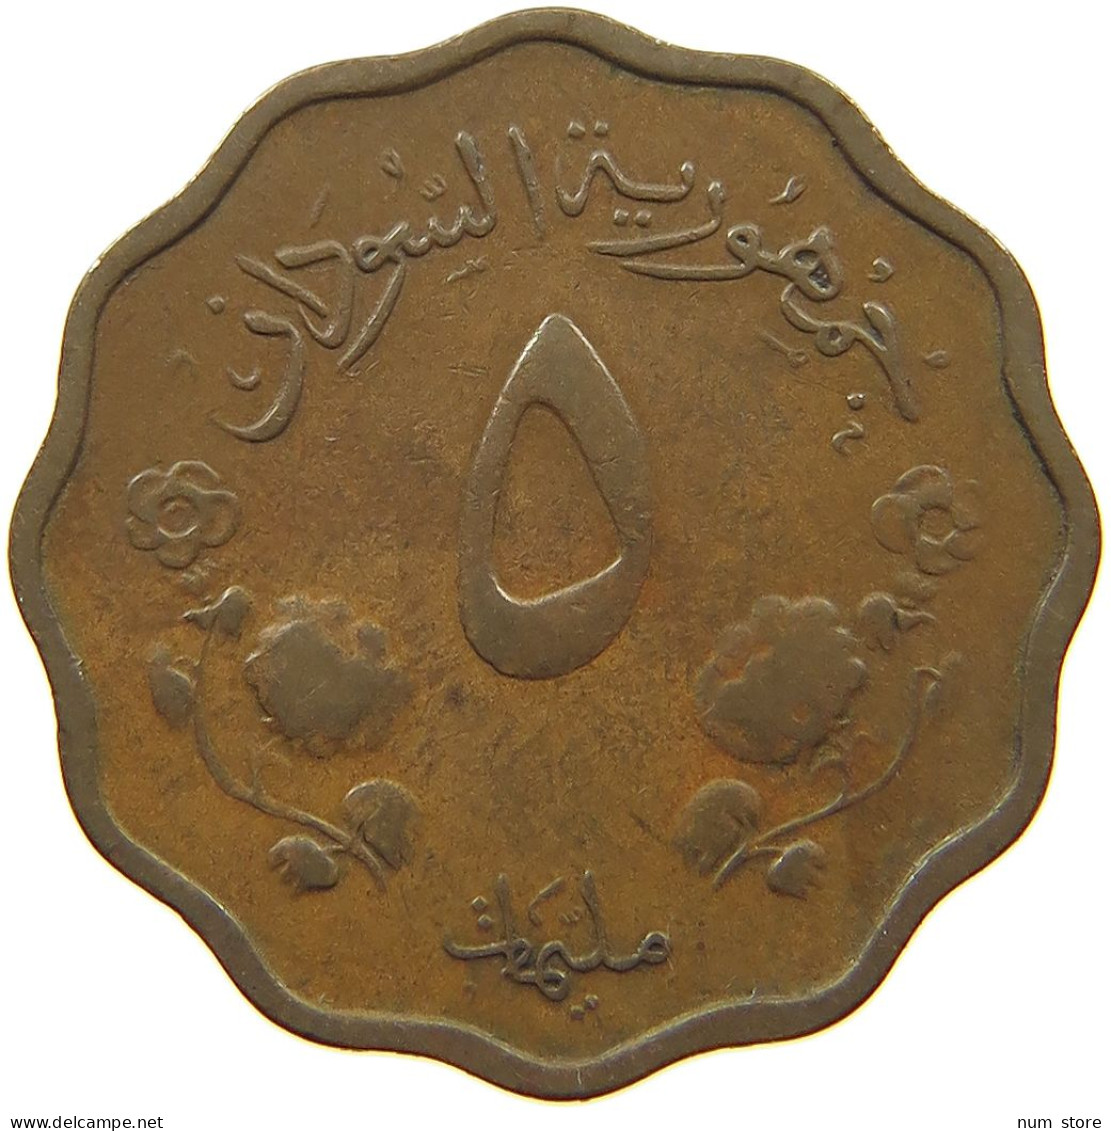 SUDAN 5 MILLIEMES 1956  #MA 019026 - Sudan